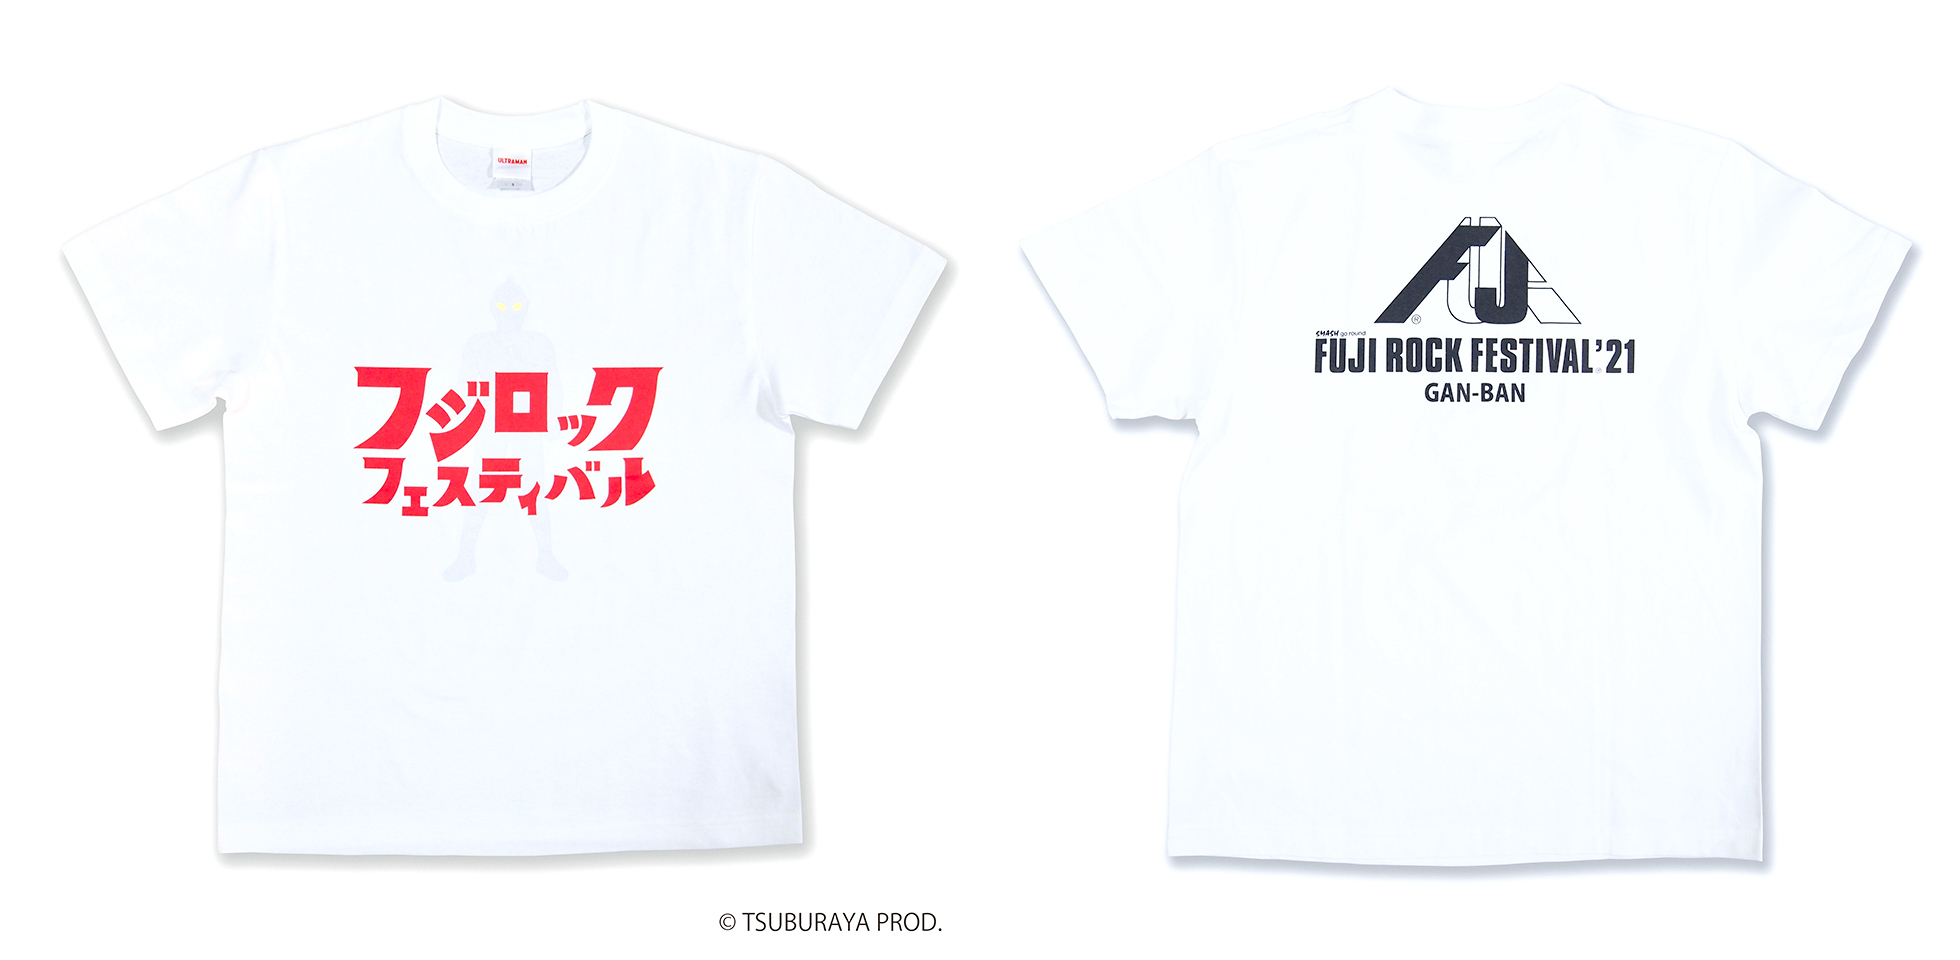 210521_news_ganbangood02_07 フジロック'21×GAN-BANコラボTシャツが一挙発売！人気キャラクターが勢揃い #fujirock